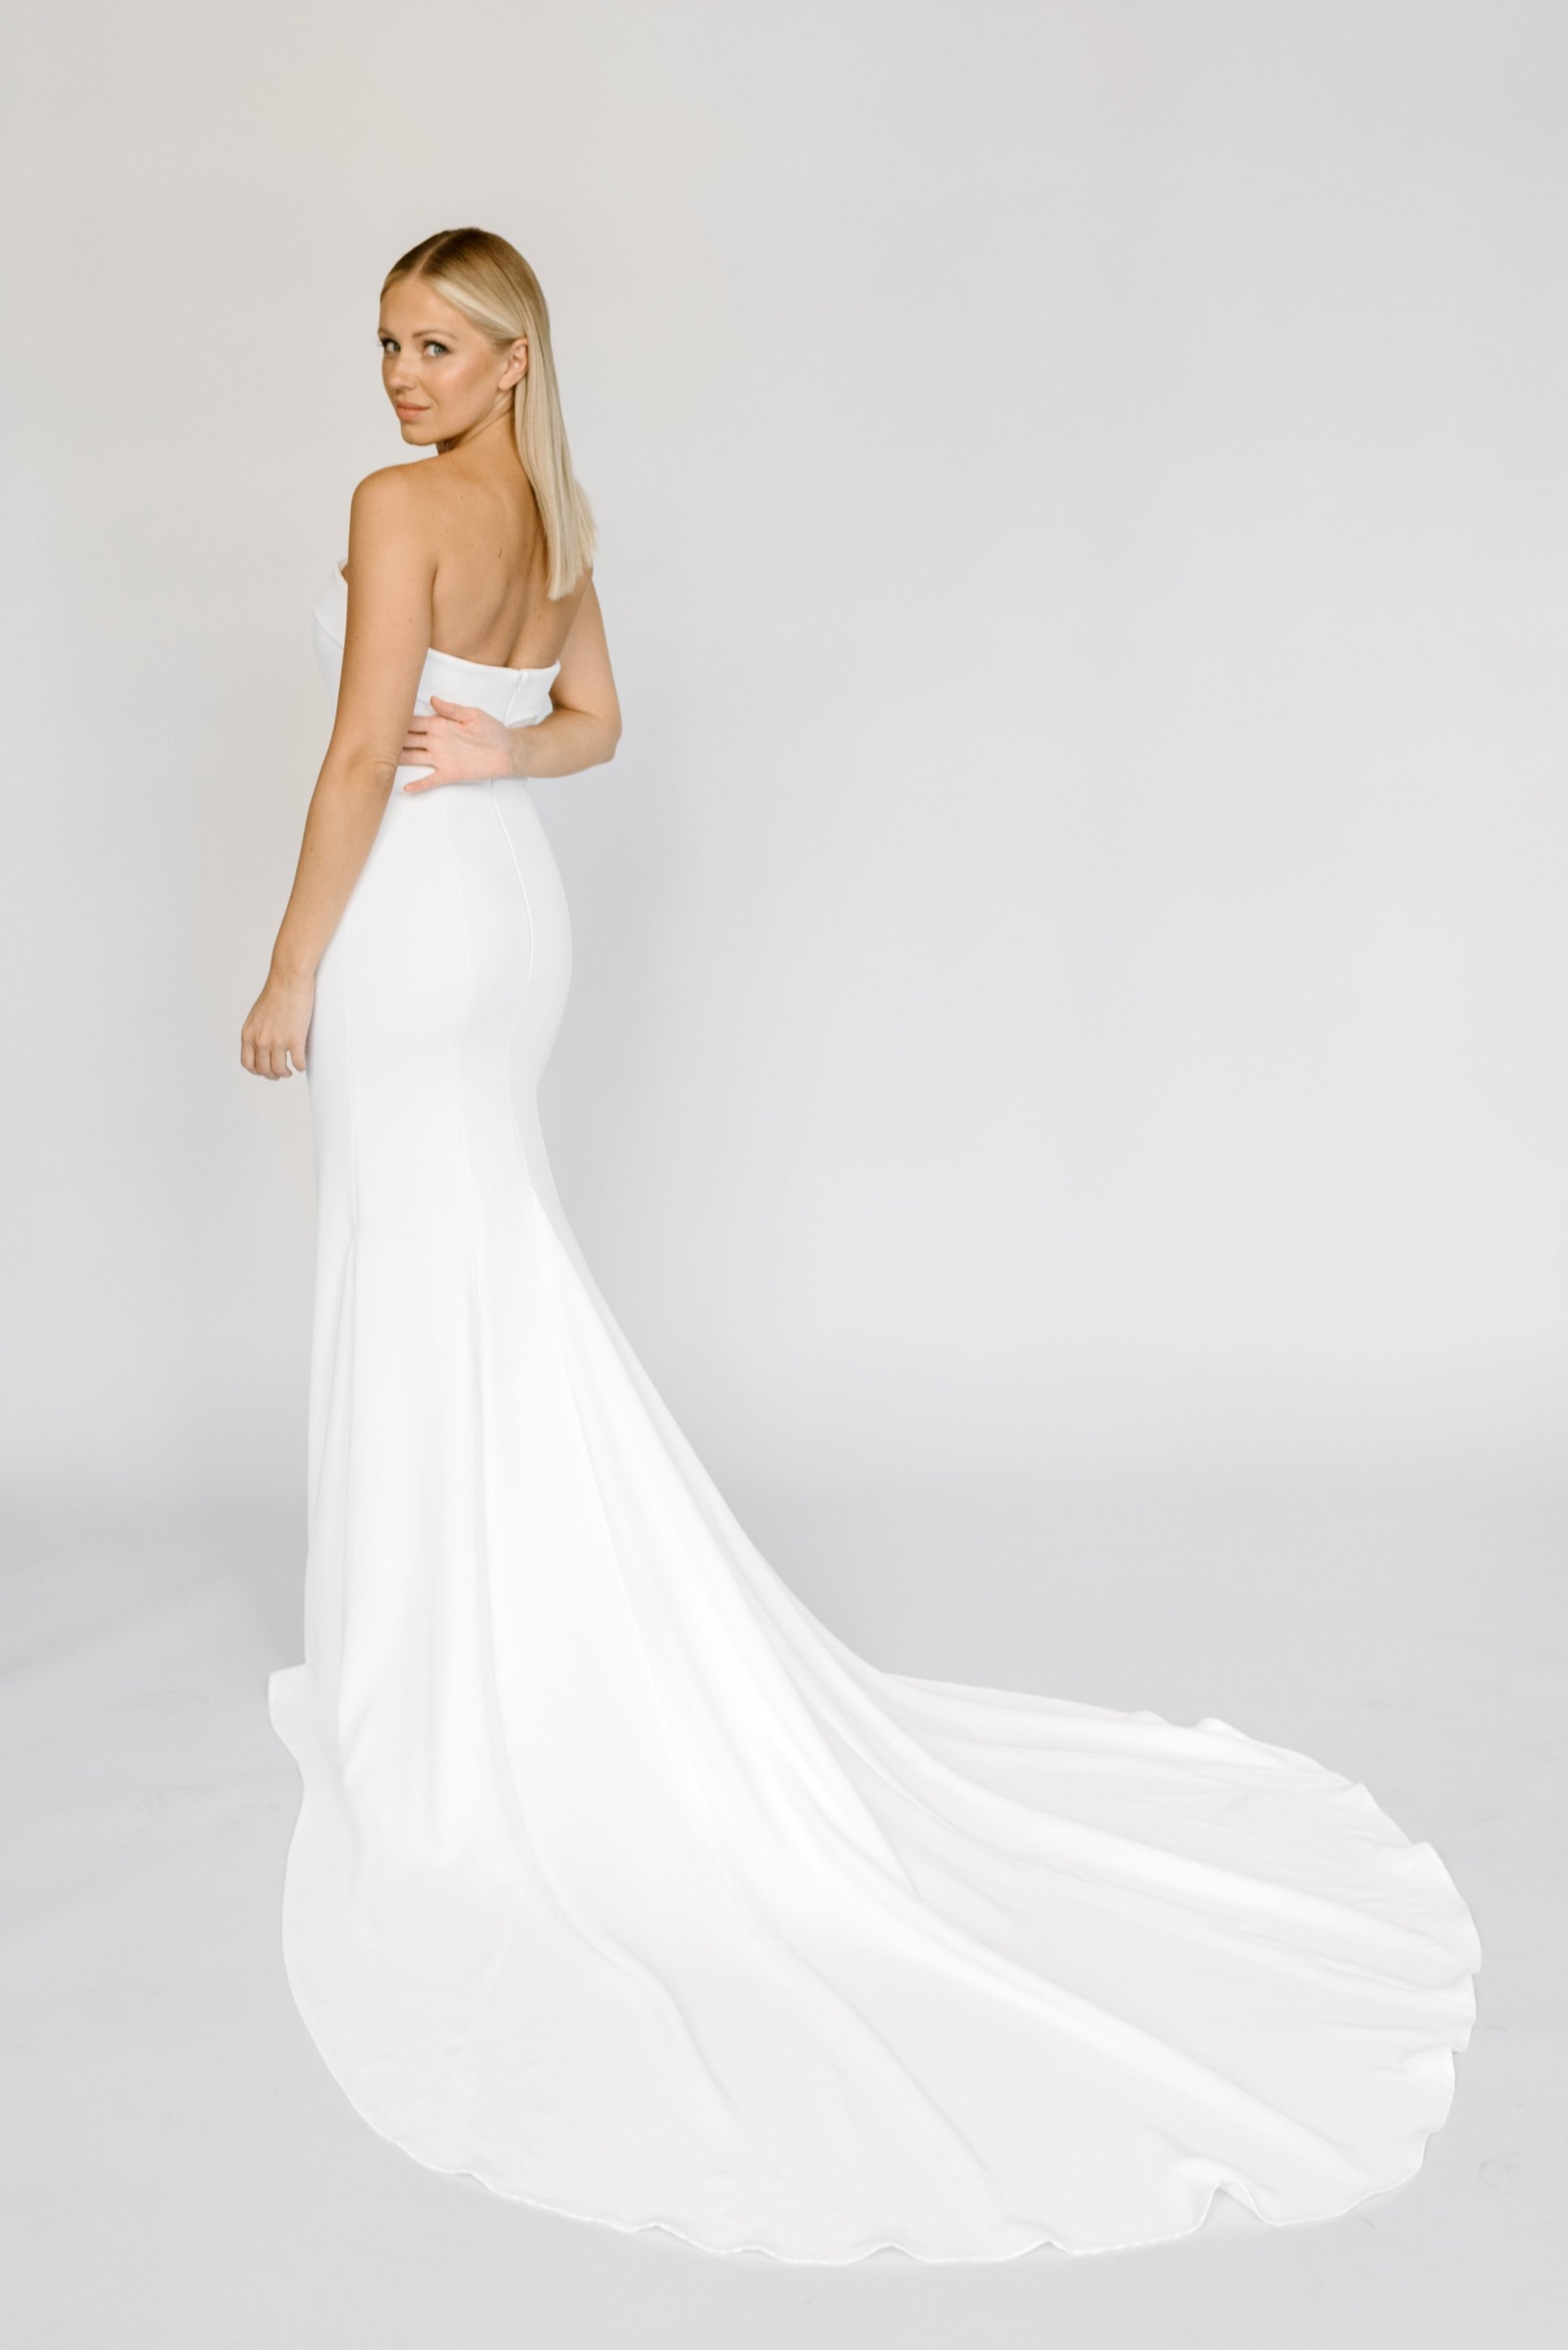 FBnCC: CC+GW: Christina's Wedding Gown by Lizlovestoons12 on DeviantArt